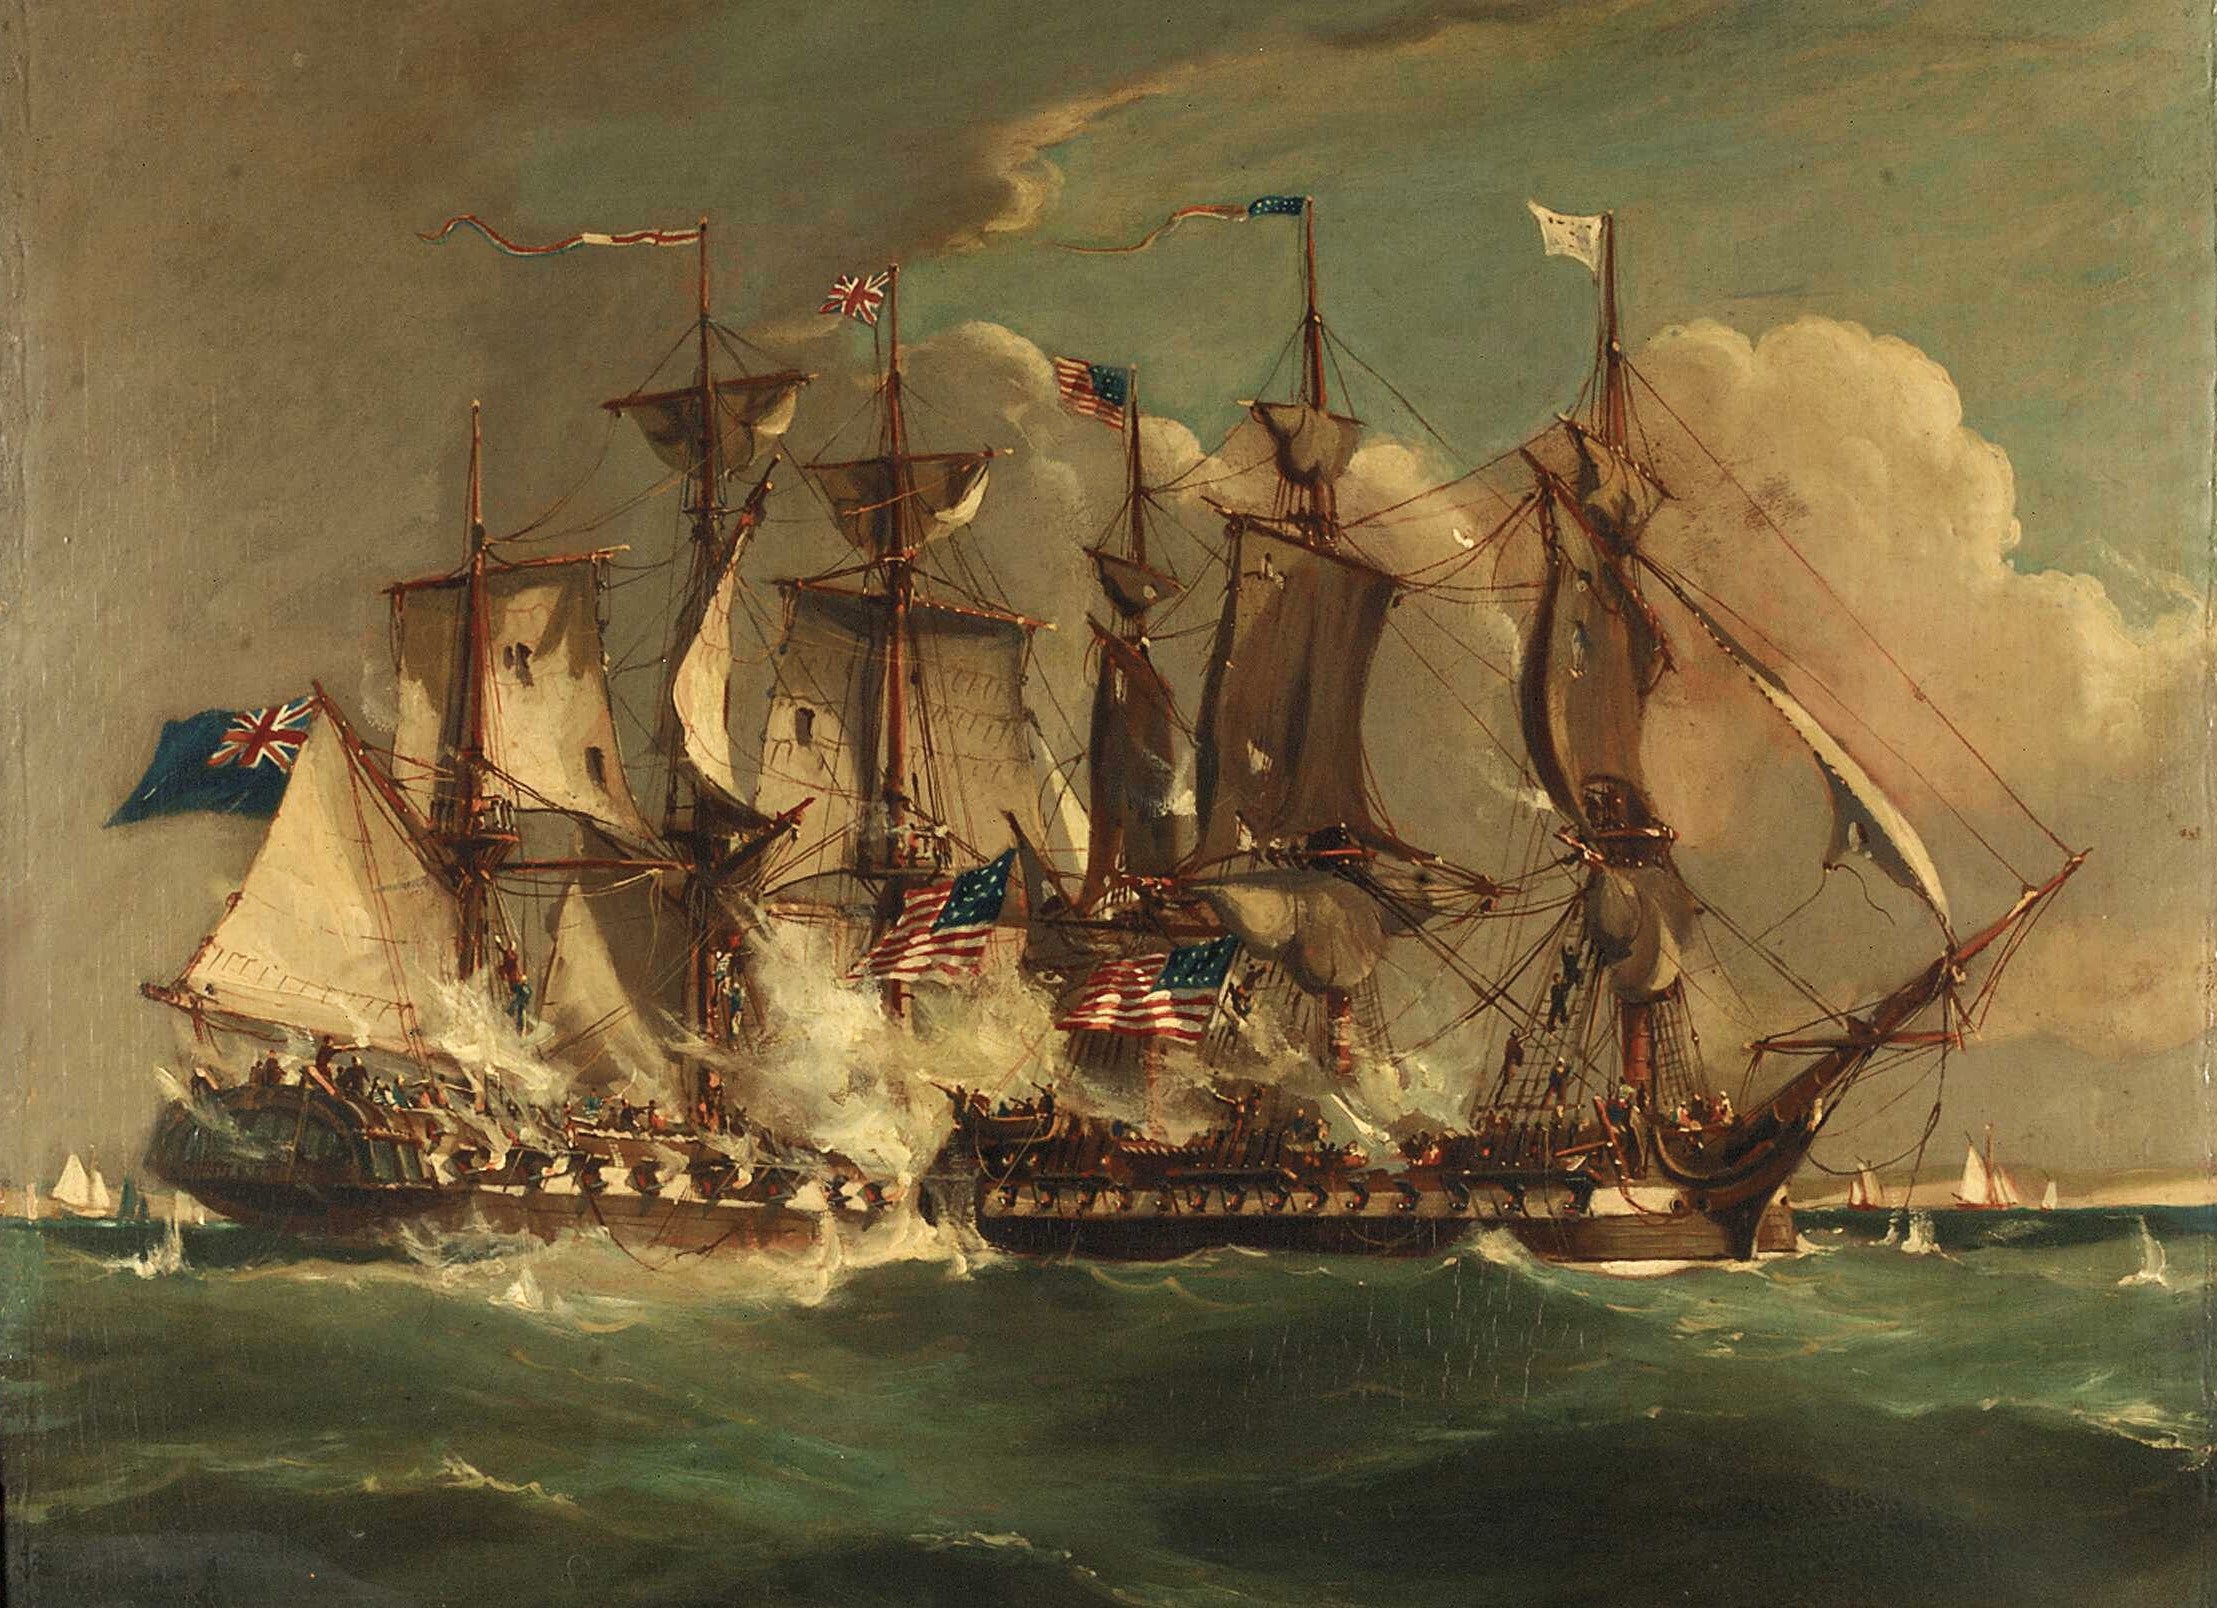 The Clash of Titans: HMS Shannon vs USS Chesapeake